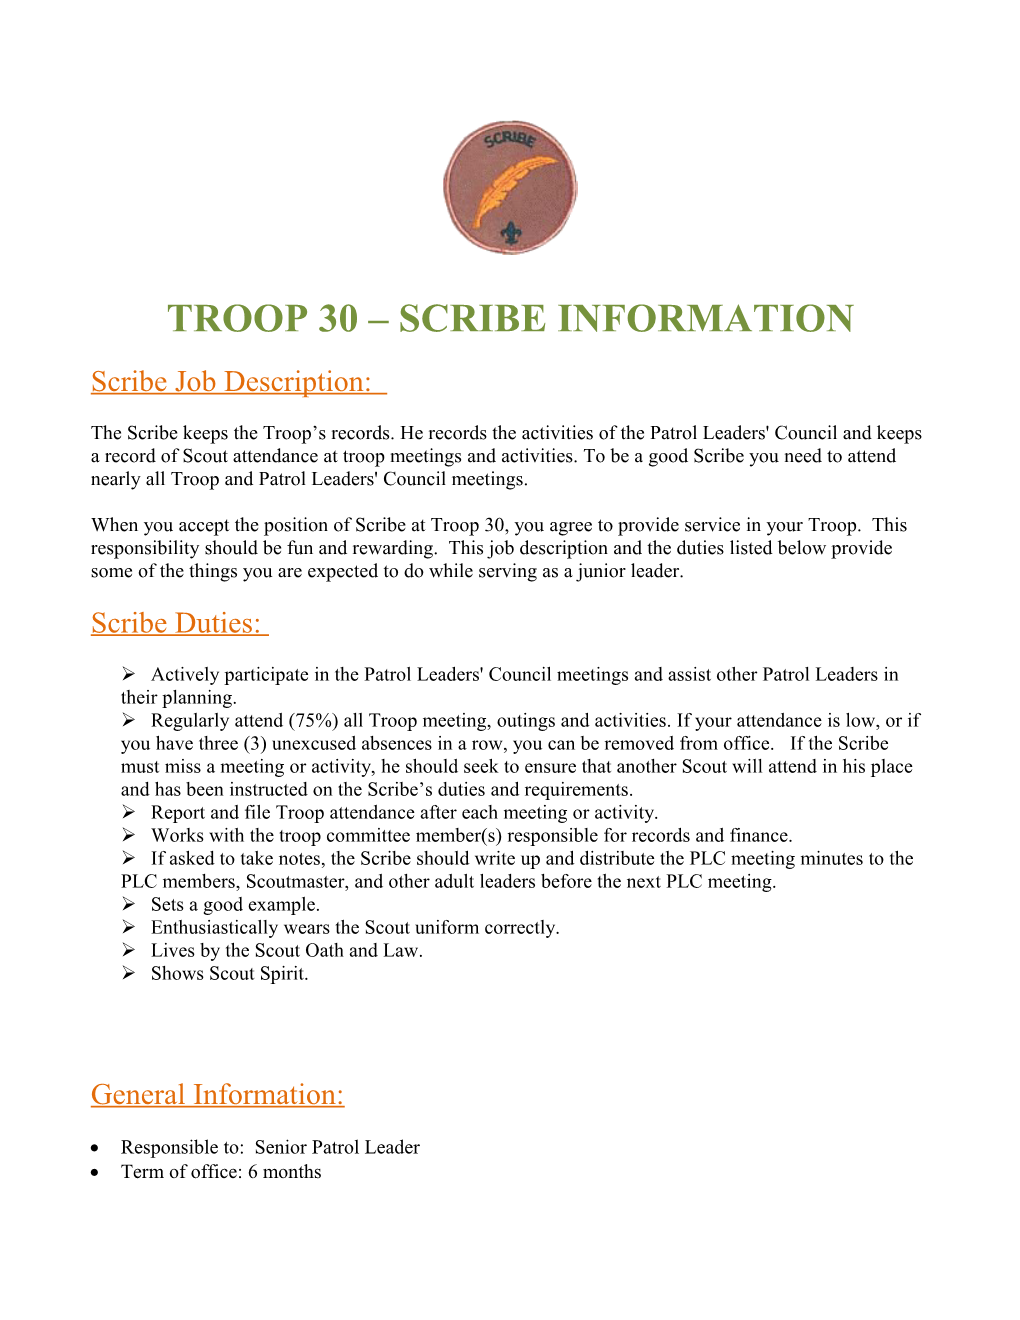 Troop 30 Scribe Information